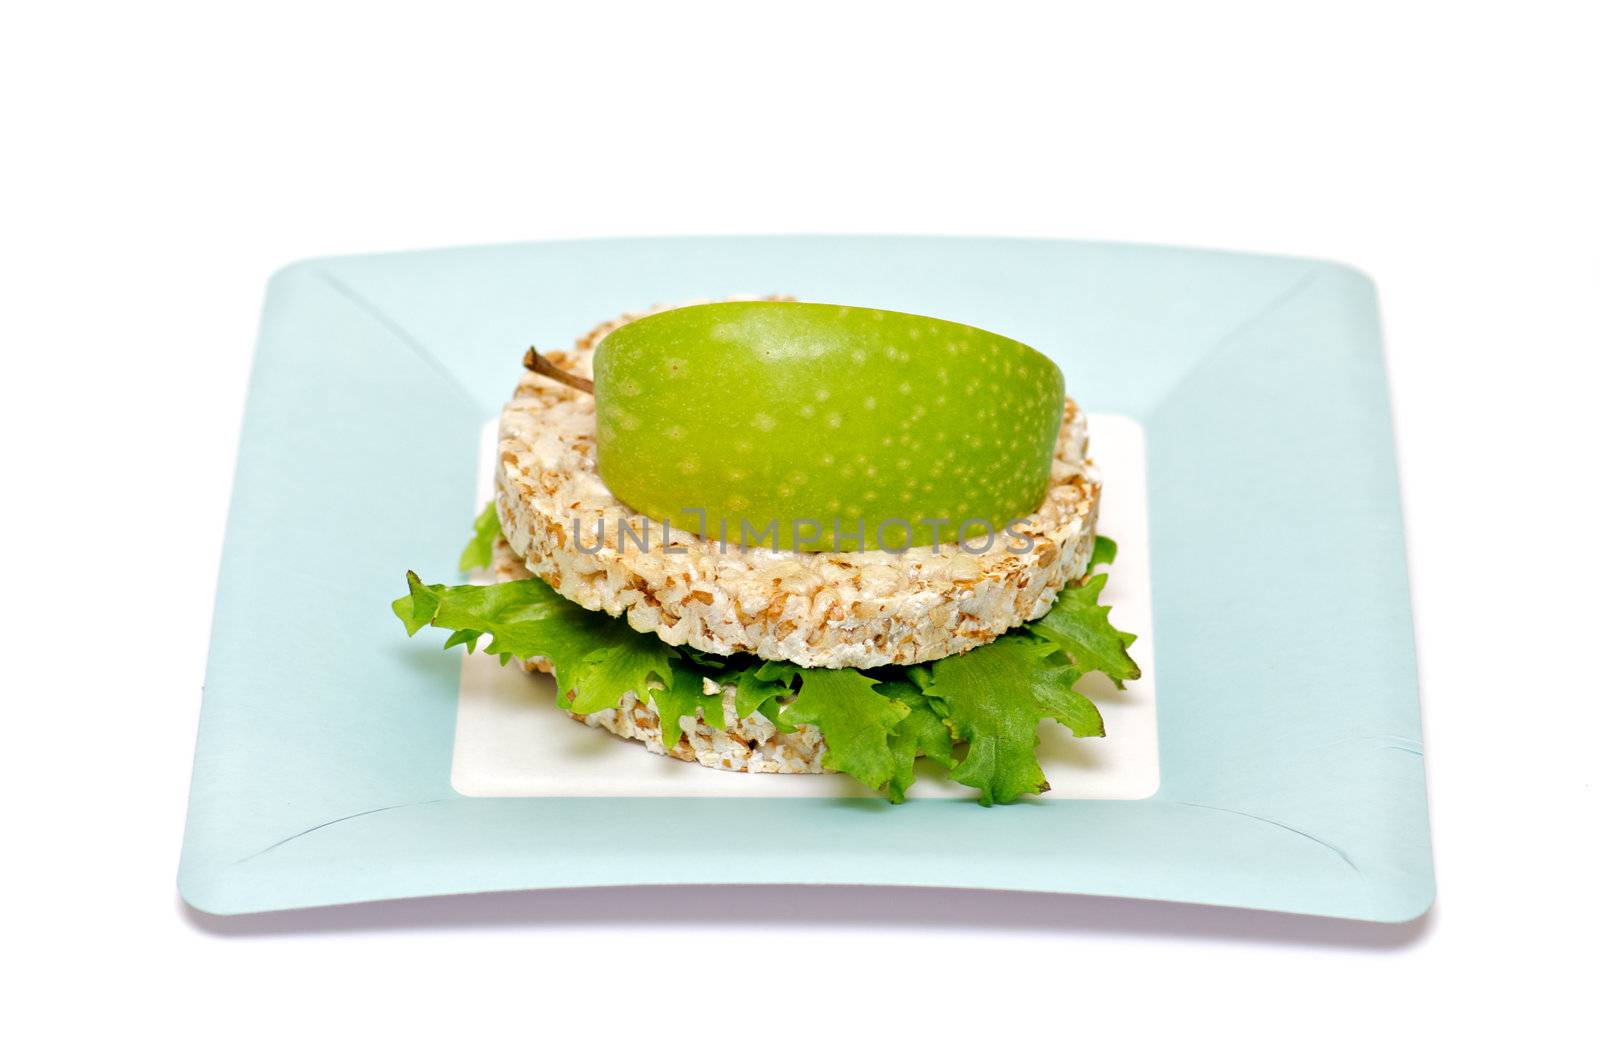 Gramineae Crispbread with Salad leaves and apple isolated on blue plate